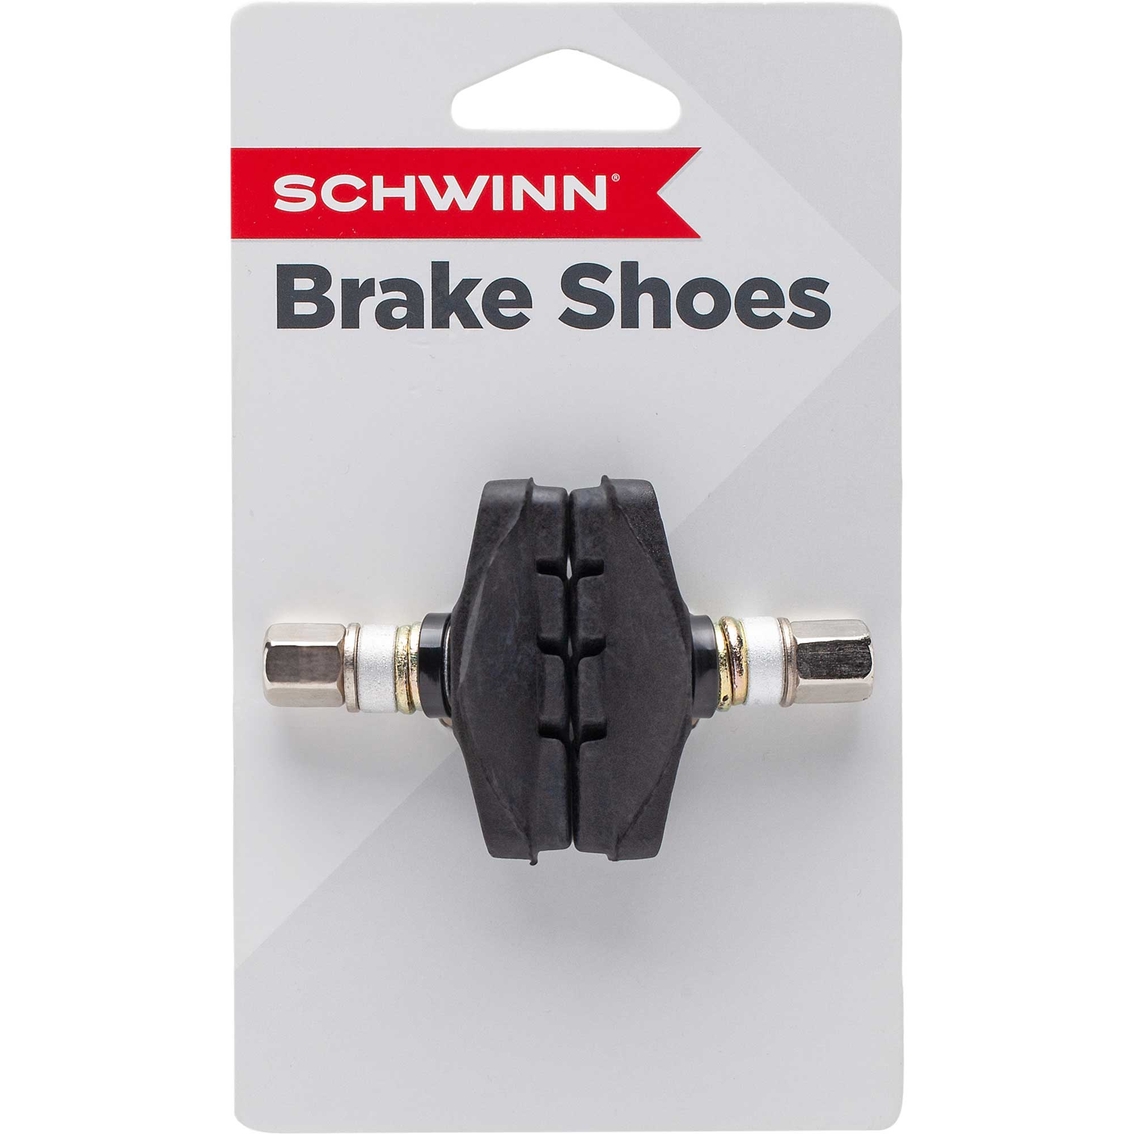 Schwinn Linear Pull Brake Pads - Image 3 of 3